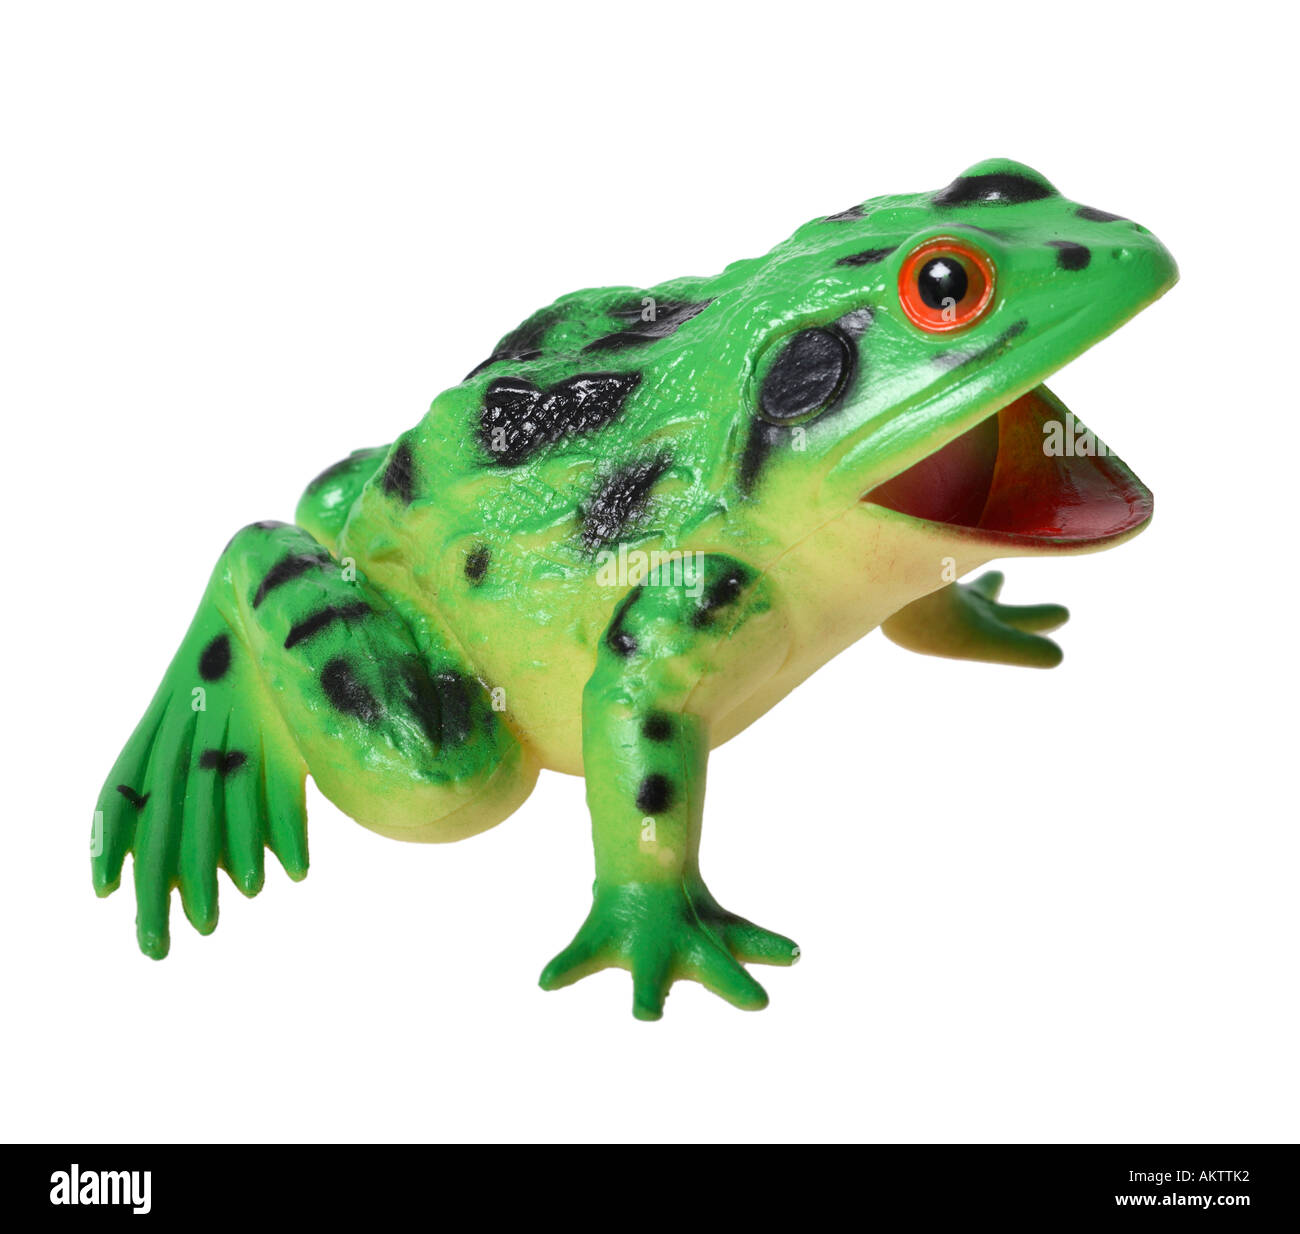 Squeaky Toy Frog Stock Photo - Alamy